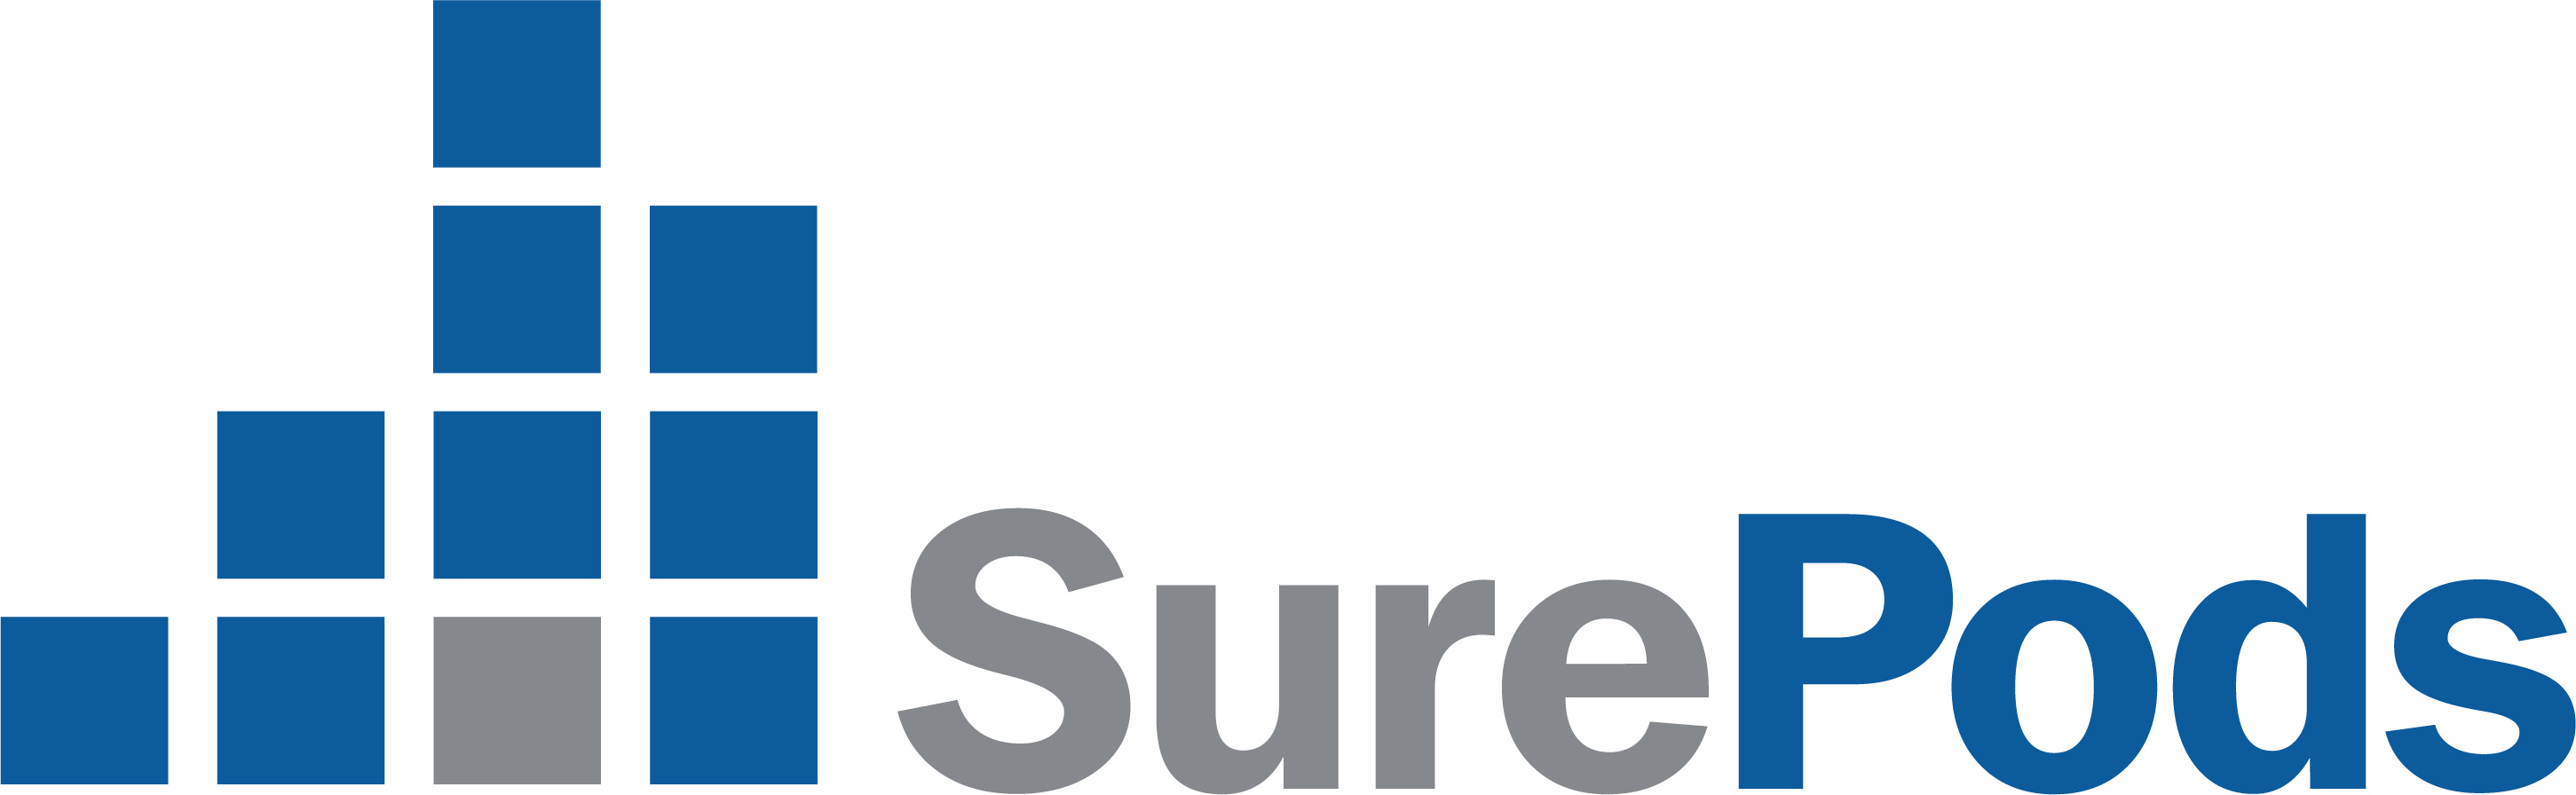 Venture Migration for SurePods Logo